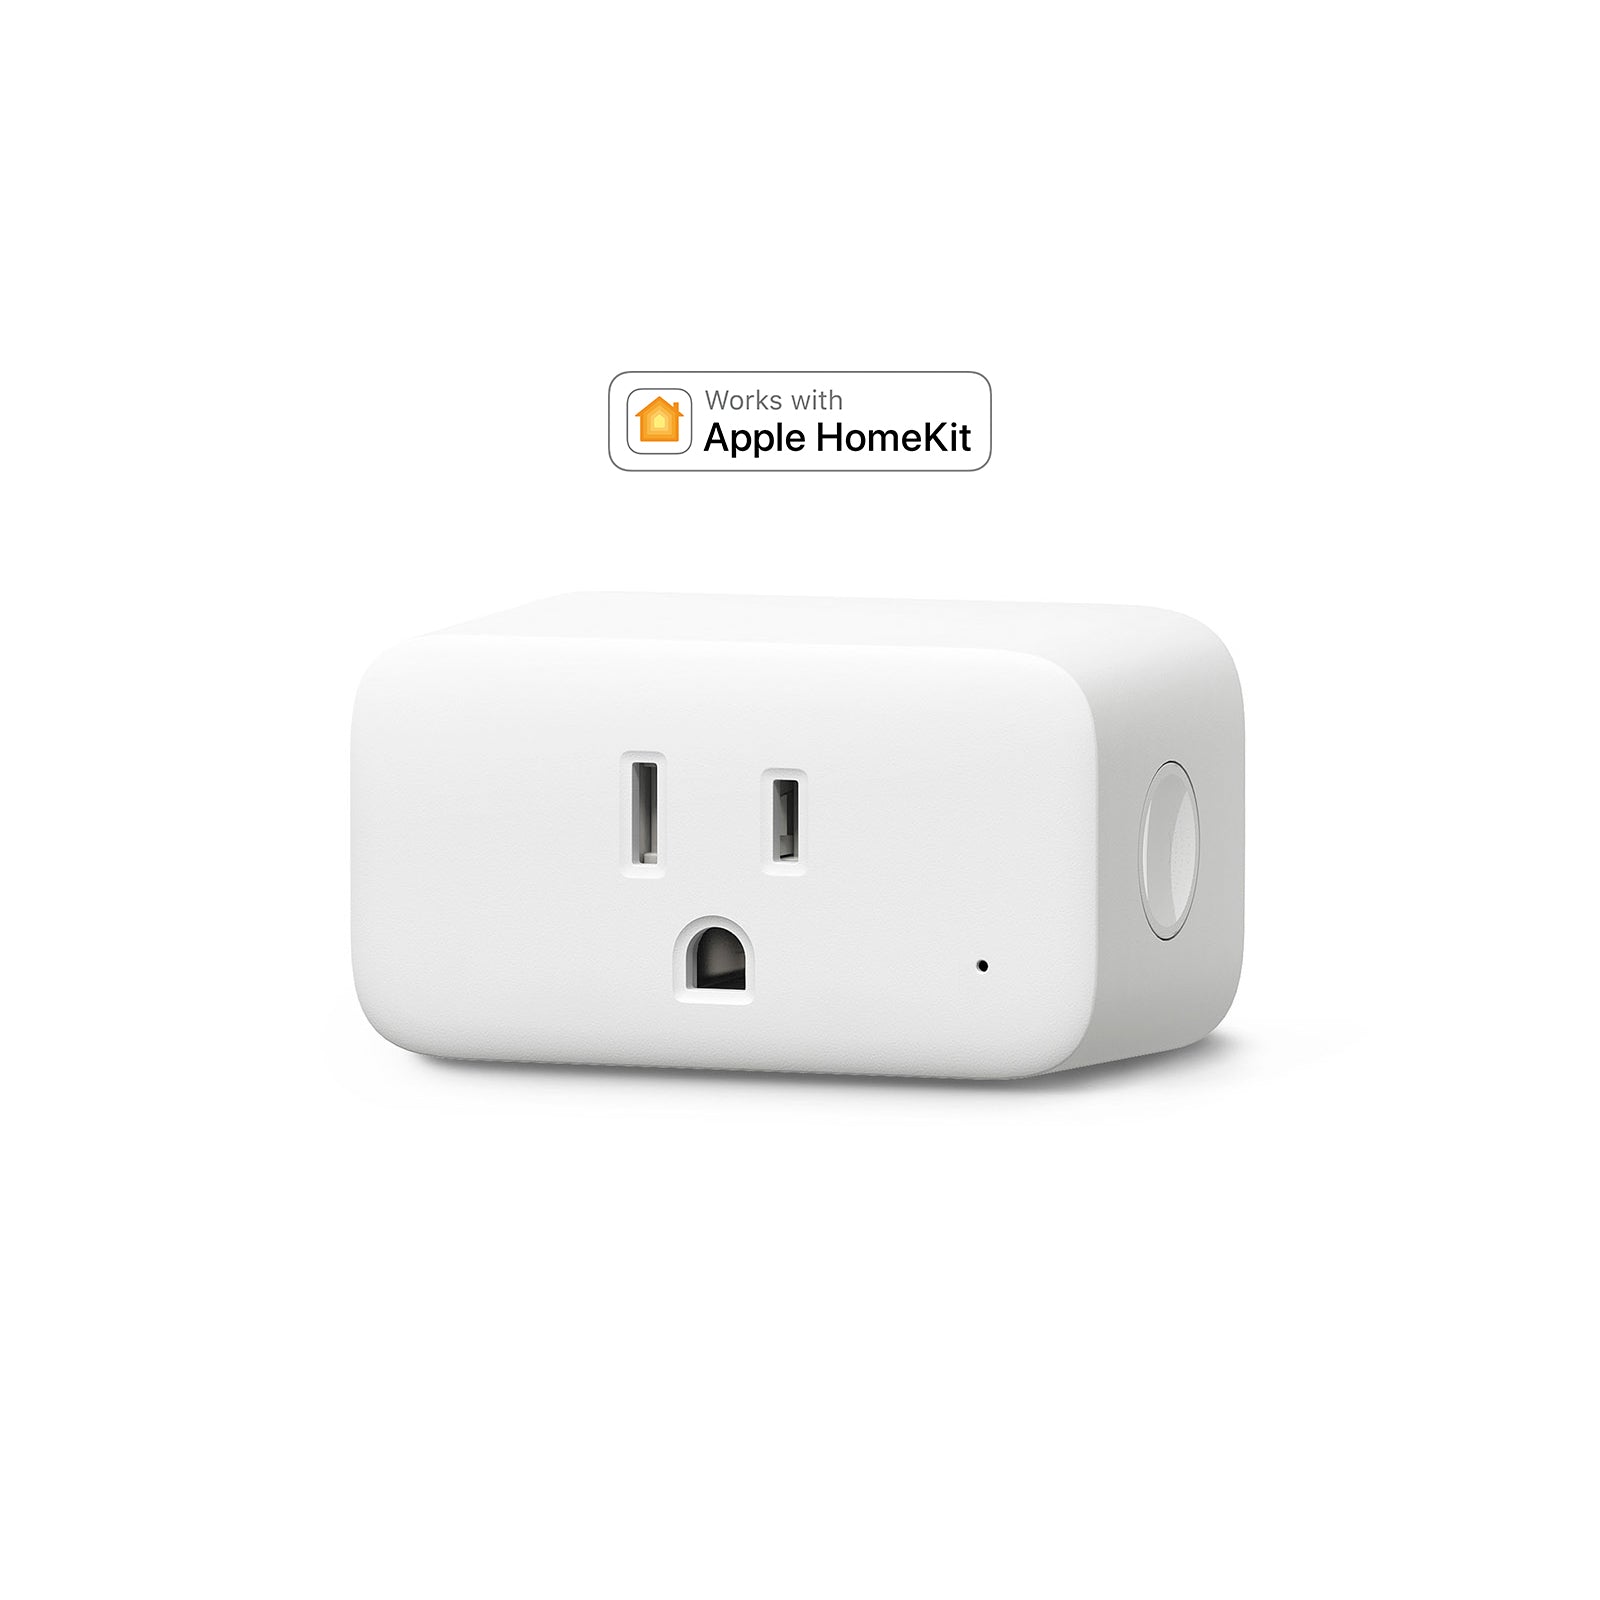 SwitchBot Plug Mini (HomeKit Enabled)